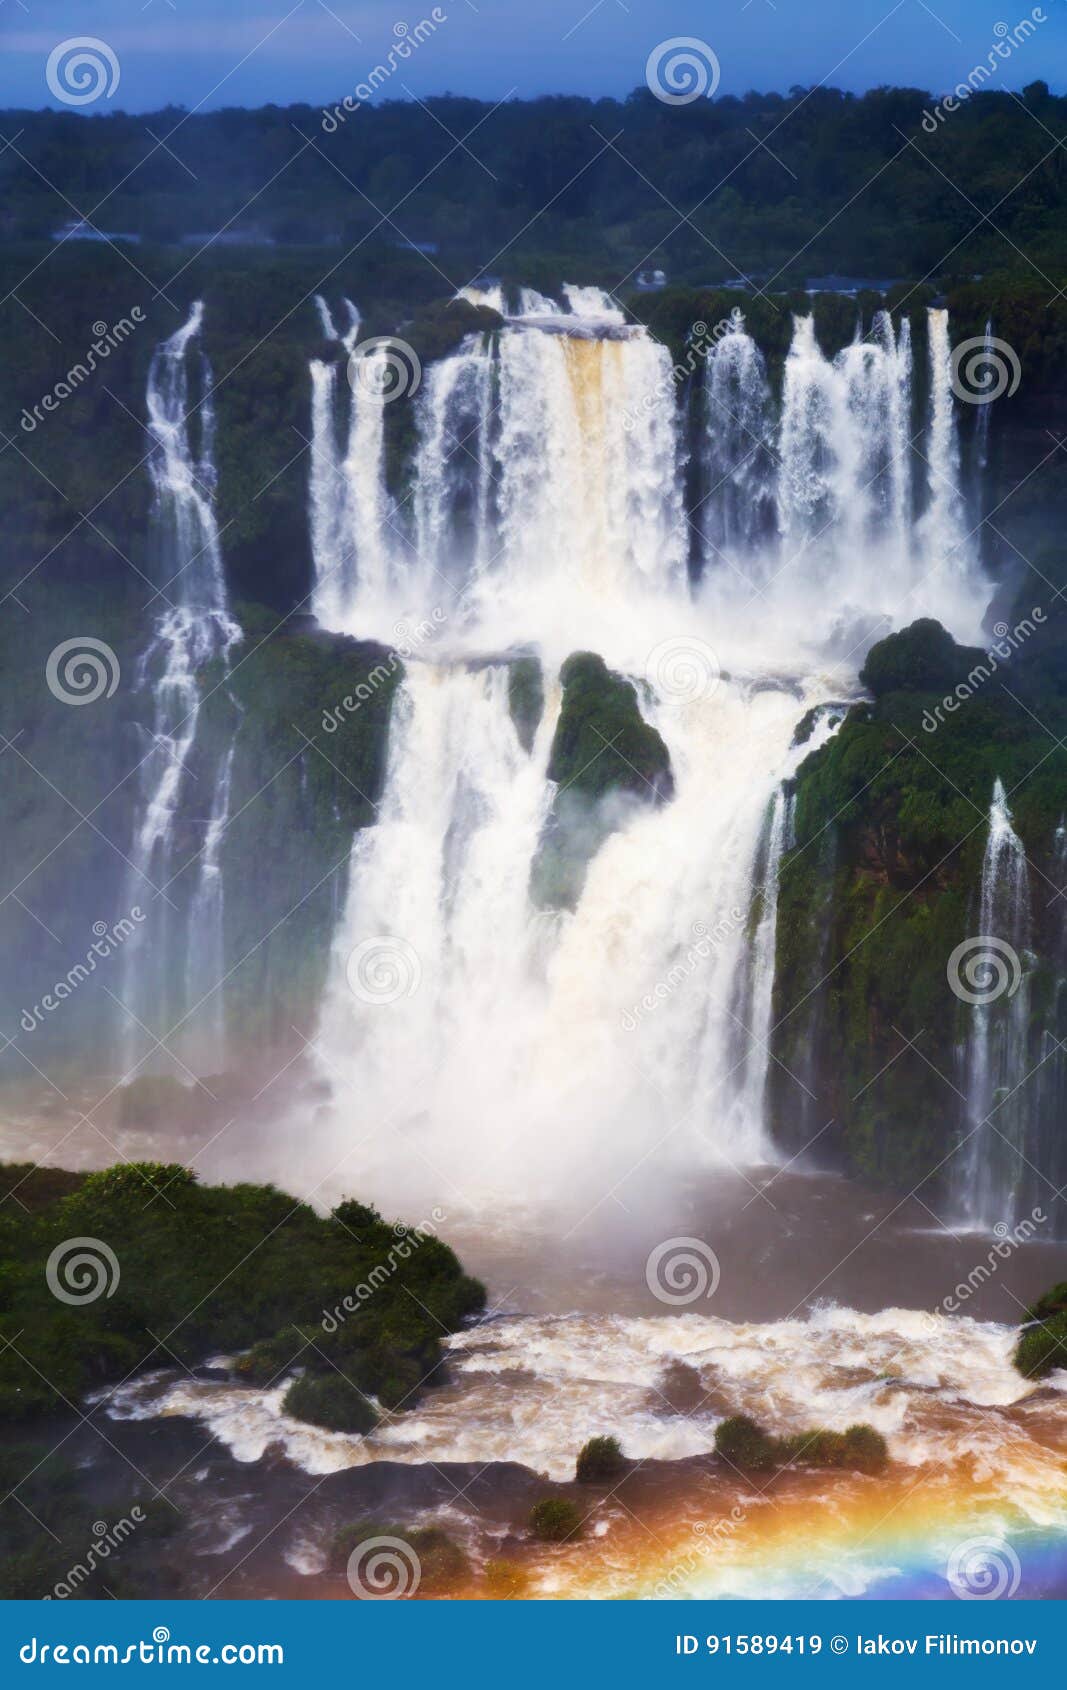 waterfall cataratas del iguazu on iguazu river, brazil